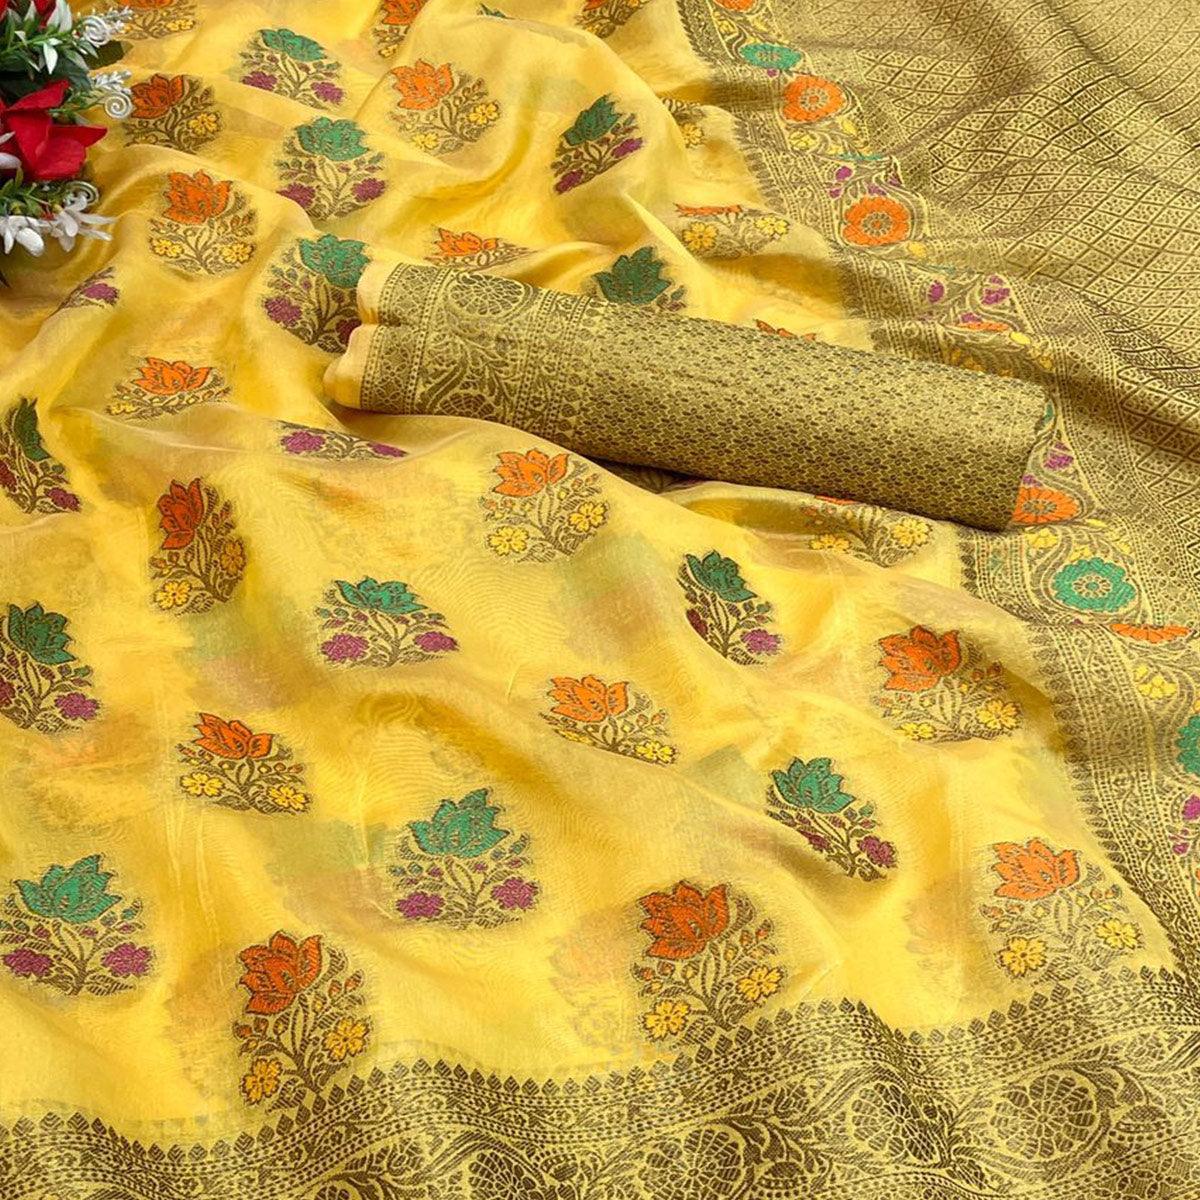 Yellow Festive Wear Floral Woven Pure Soft Organza Saree - Peachmode